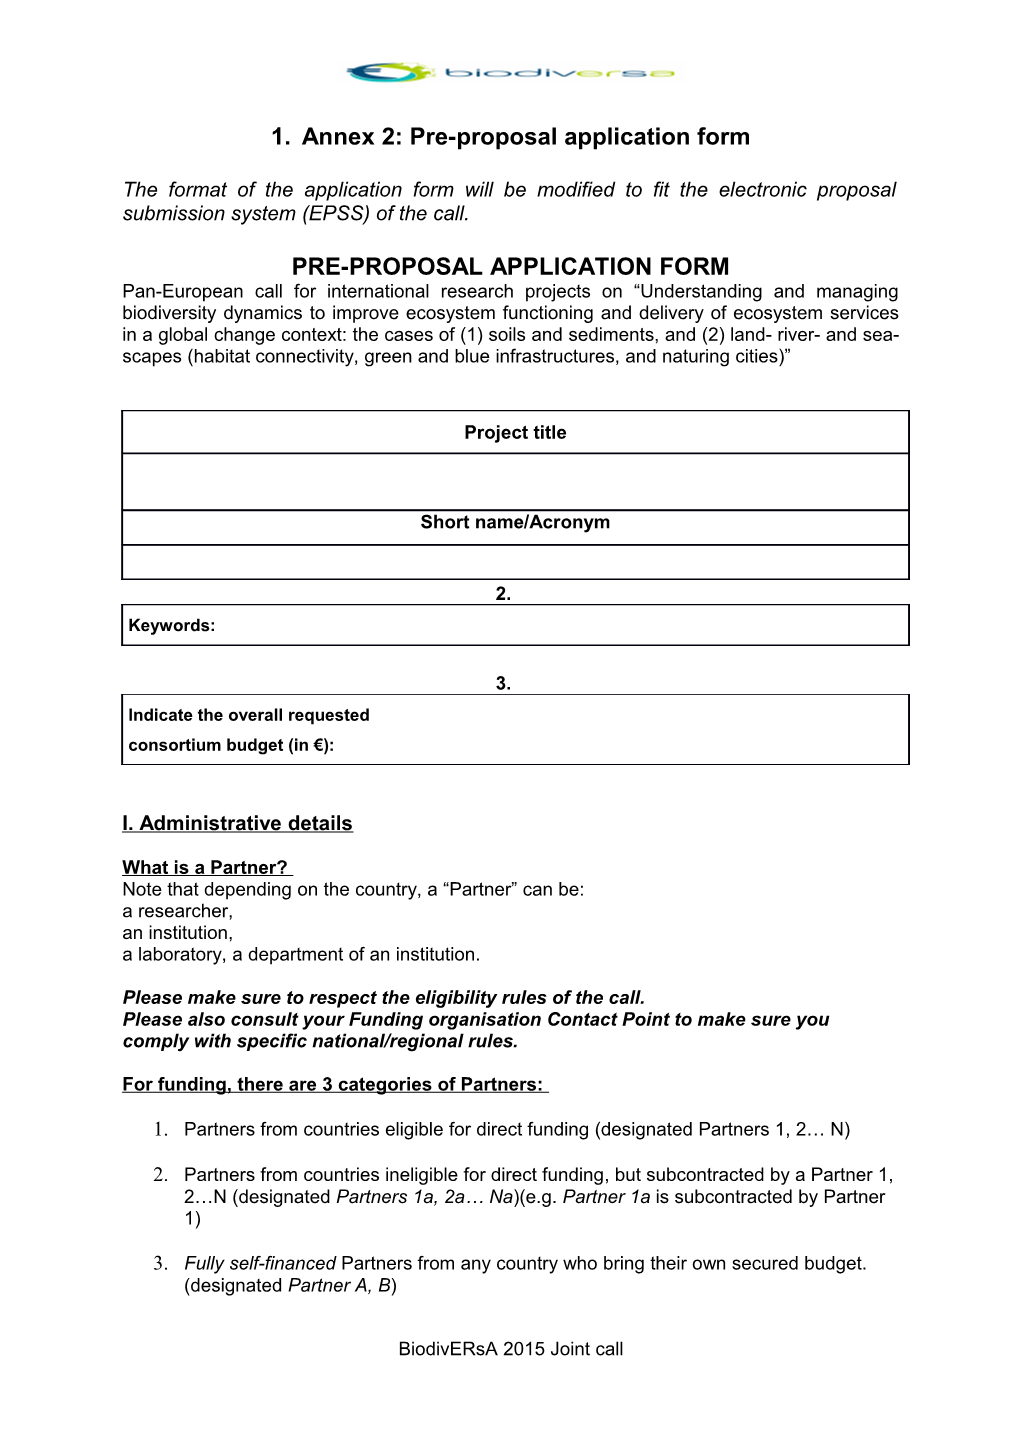 Annex 2: Pre-Proposalapplication Form